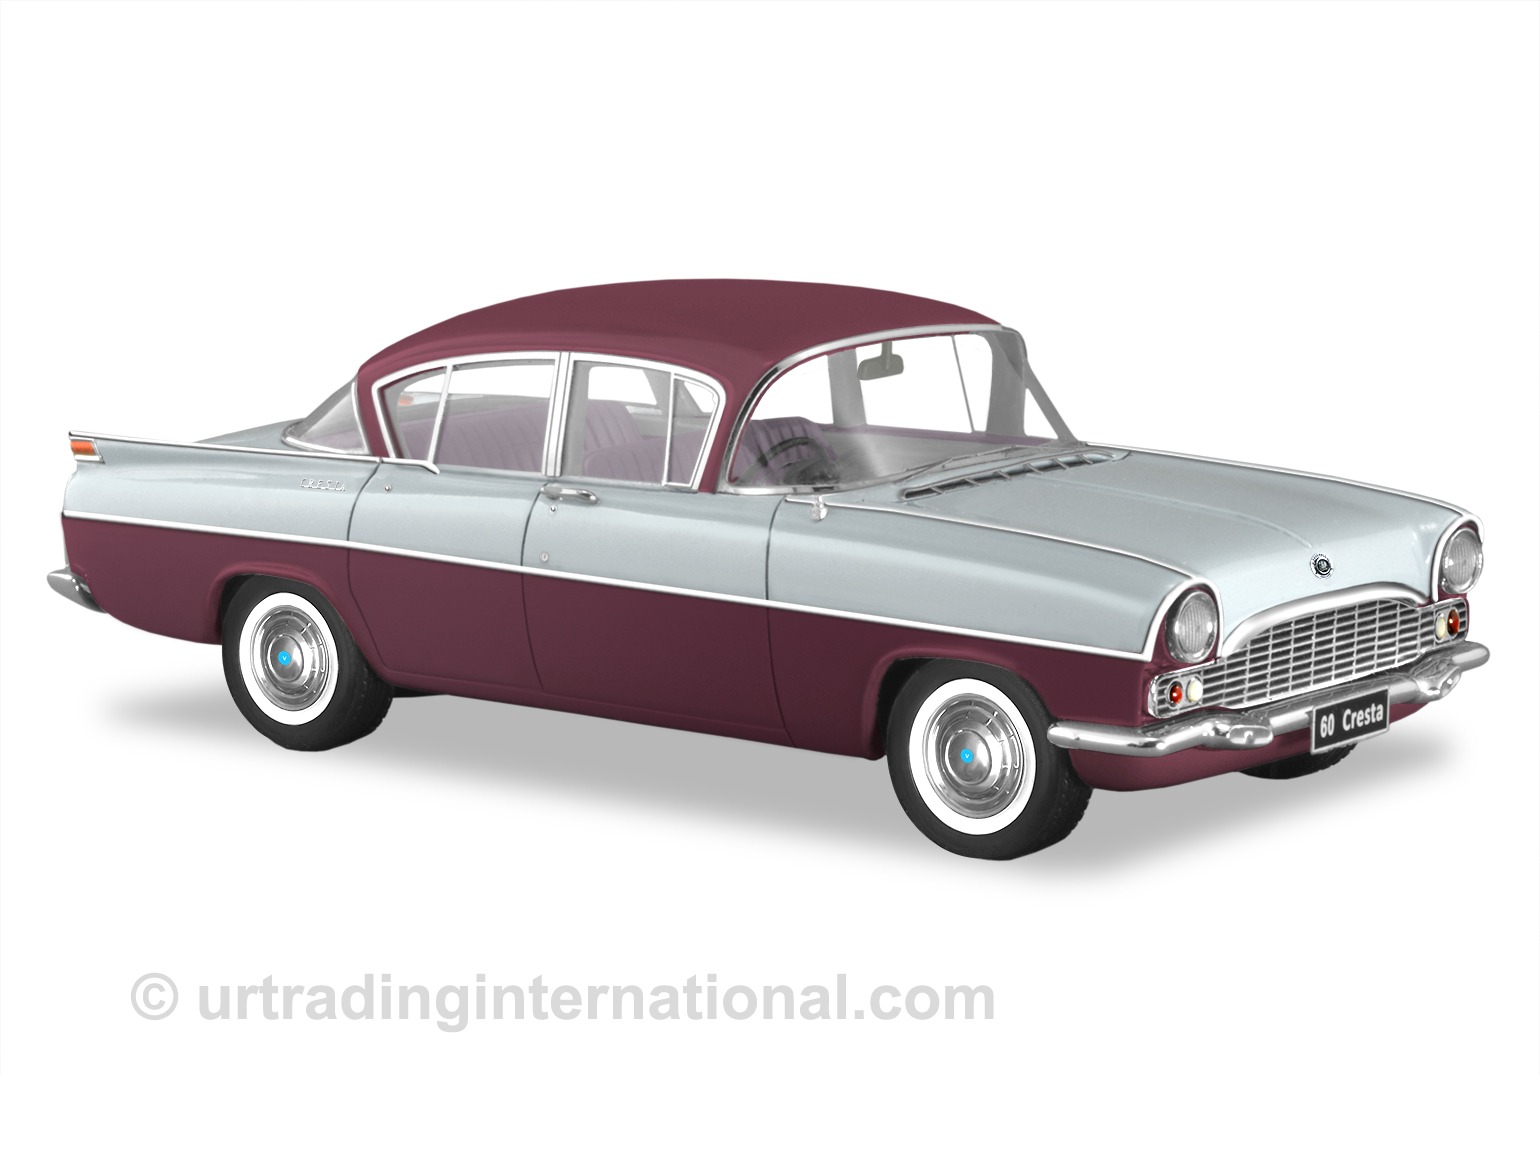 1960 Vauxhall Cresta PA – Maroon/Grey